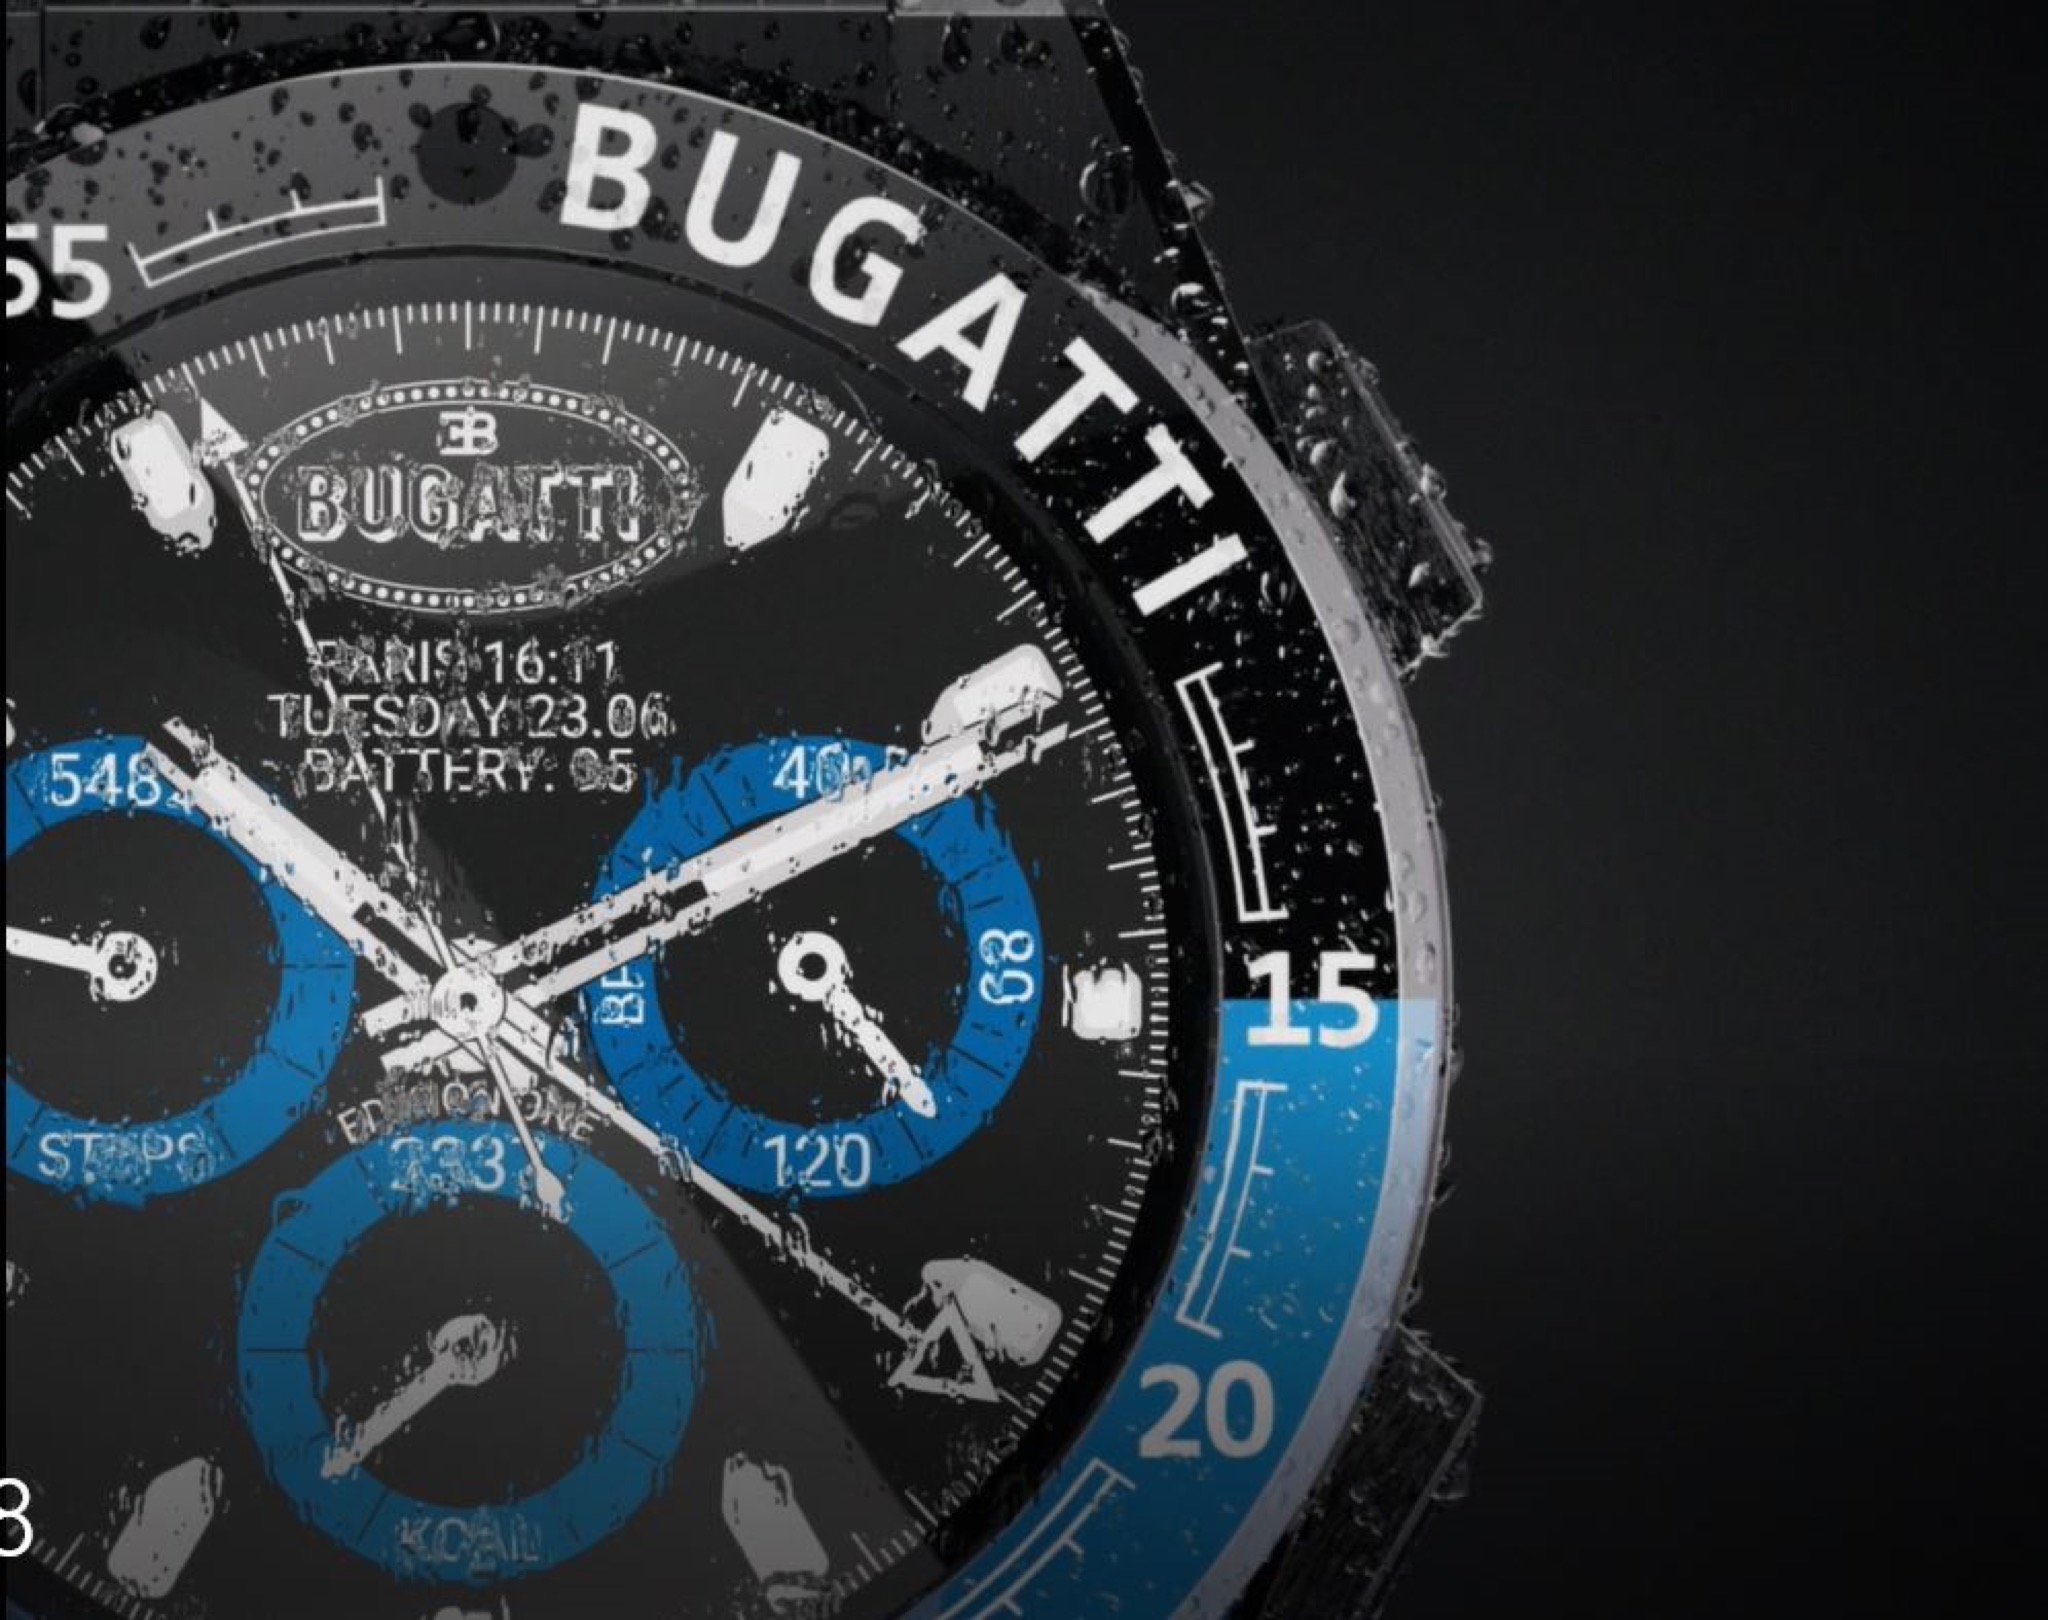 tinhte_bugatti_smart_watch_21.jpg